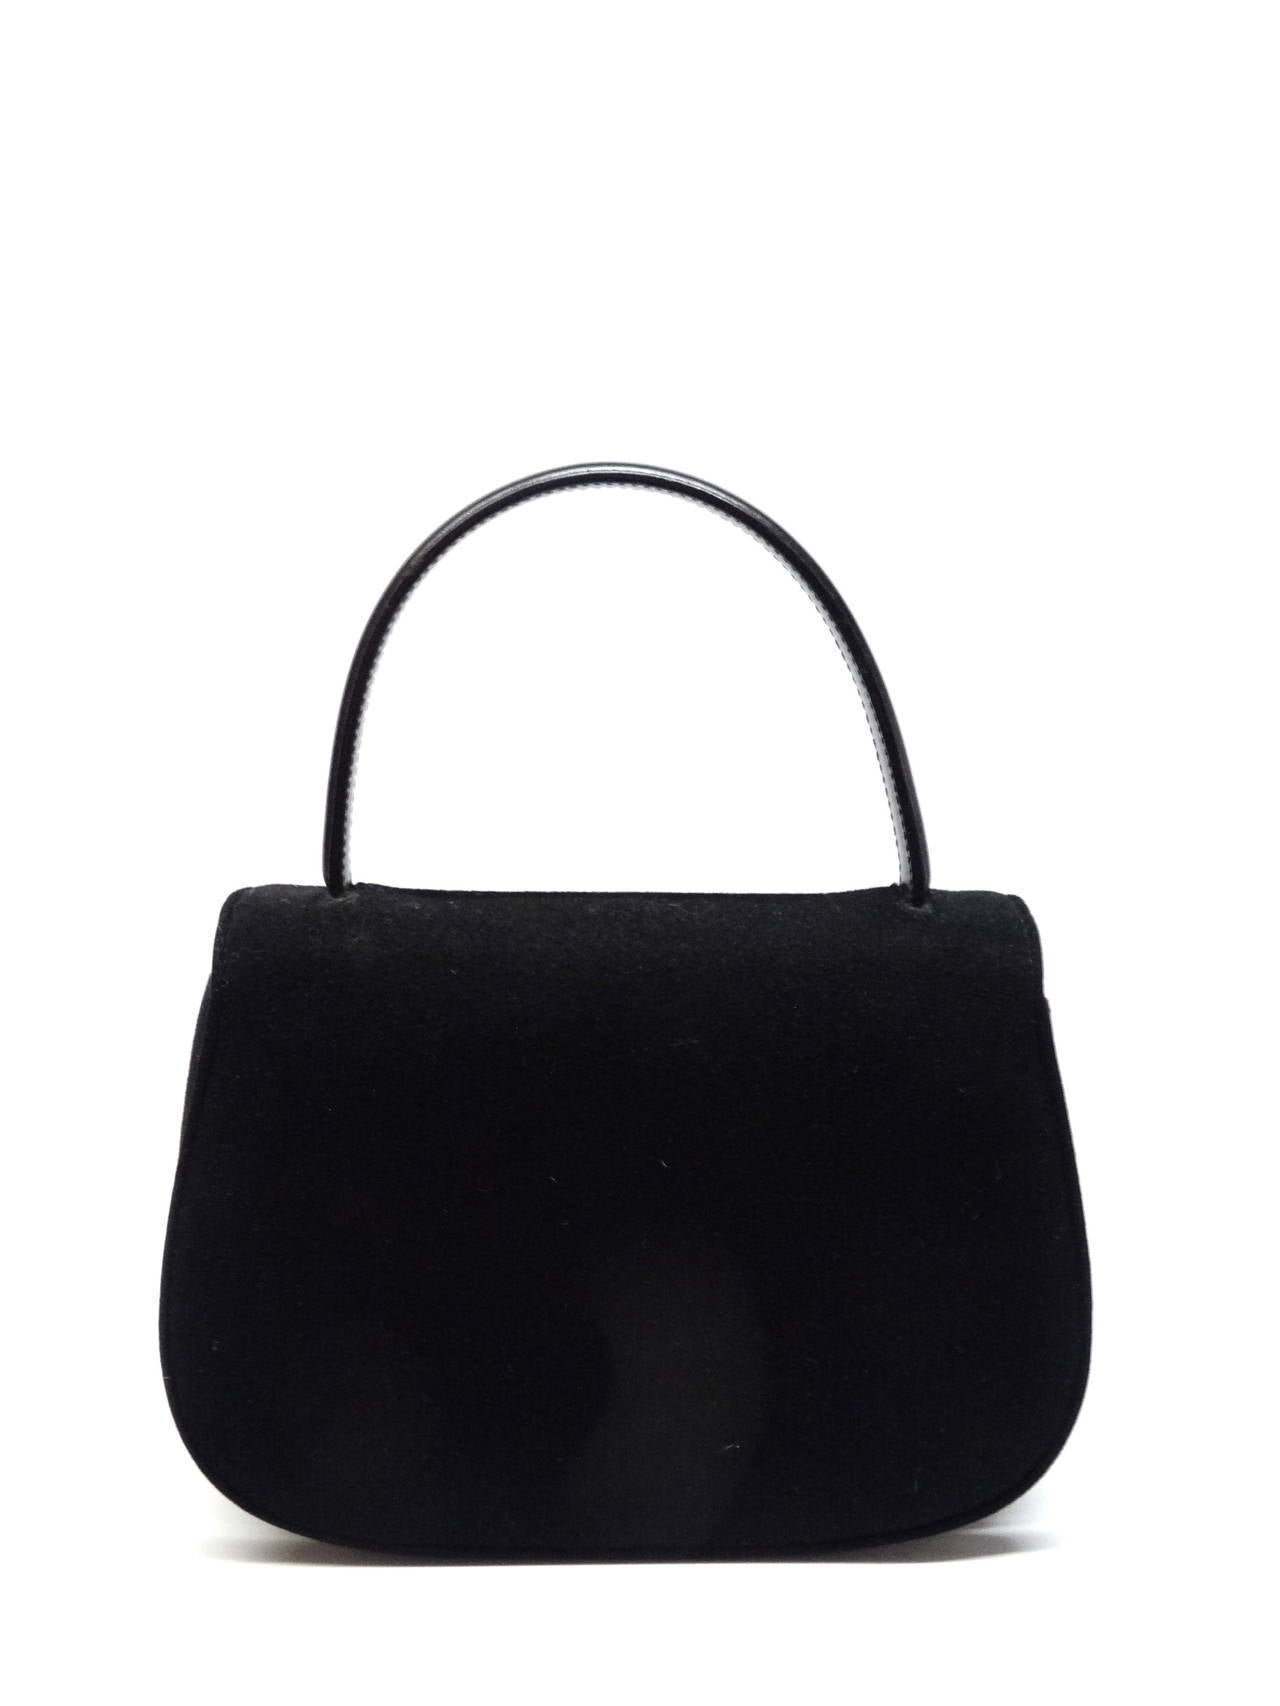 1990s Black Gucci Felt Leather Handle Handbag 2